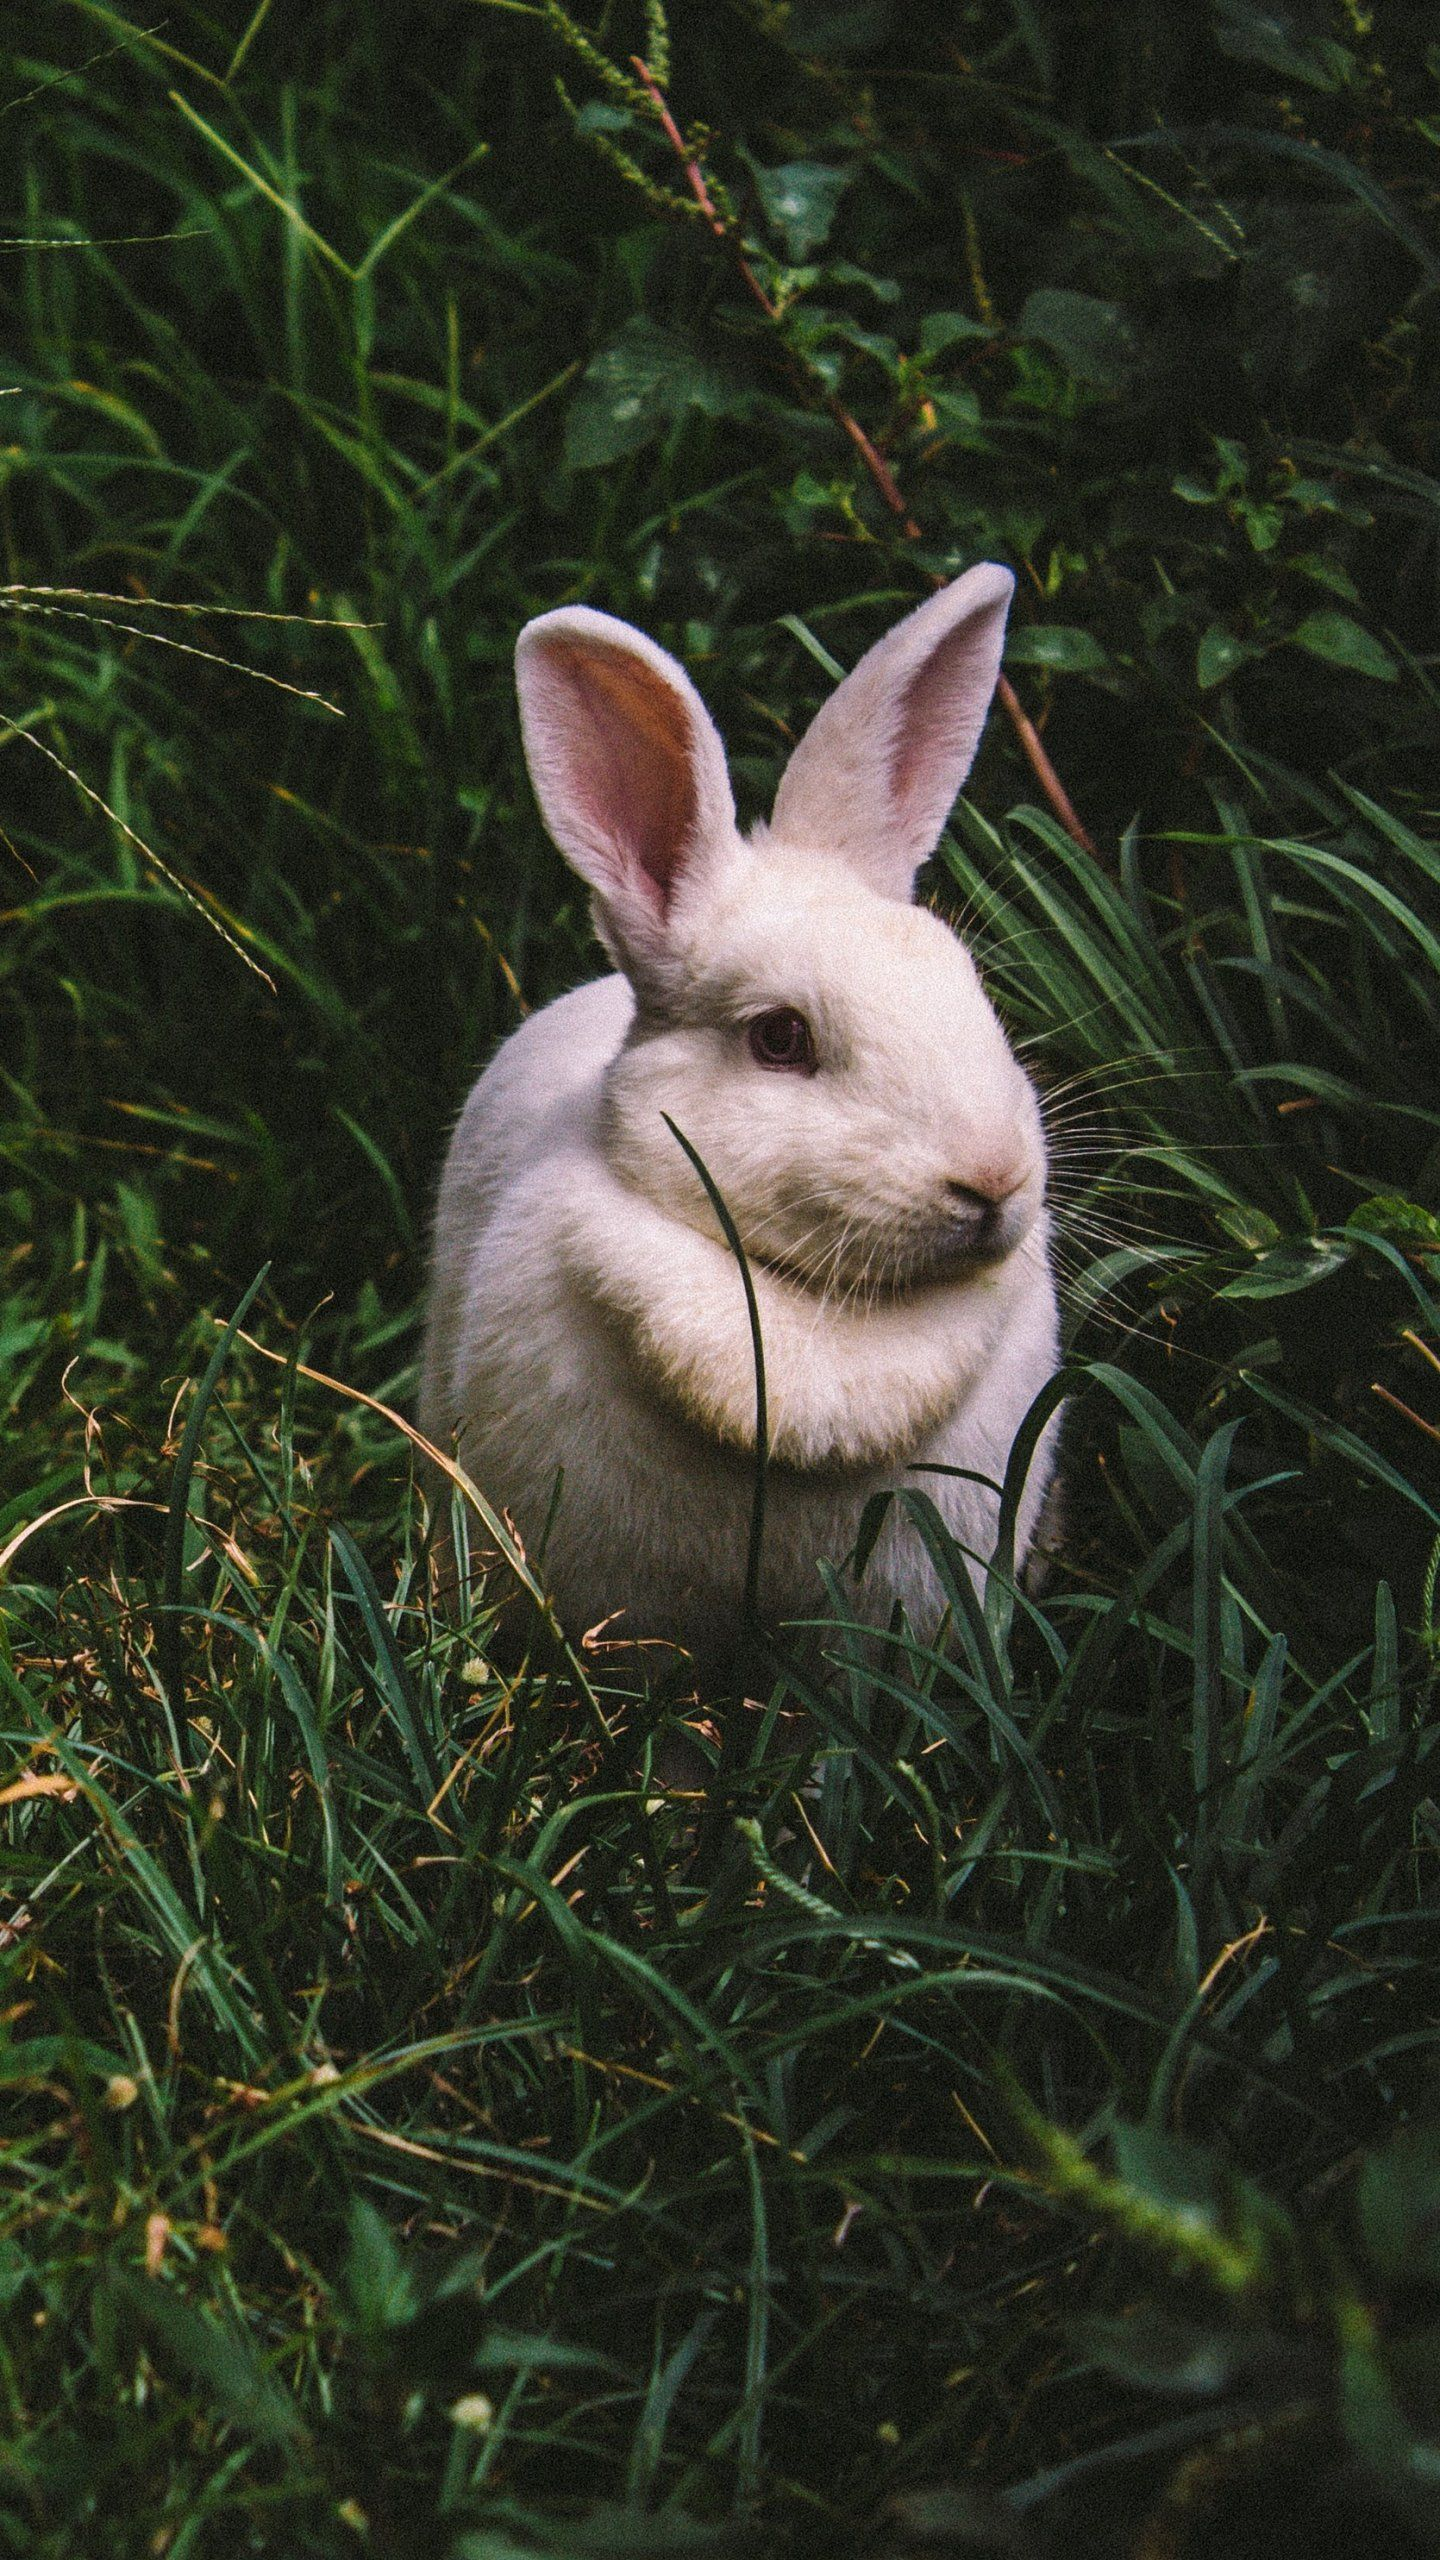 1440x2560 White Rabbit Wallpaper iPhone, Android \u0026 Desktop Backgrounds | Rabbit wallpaper, Rabbit, Animals